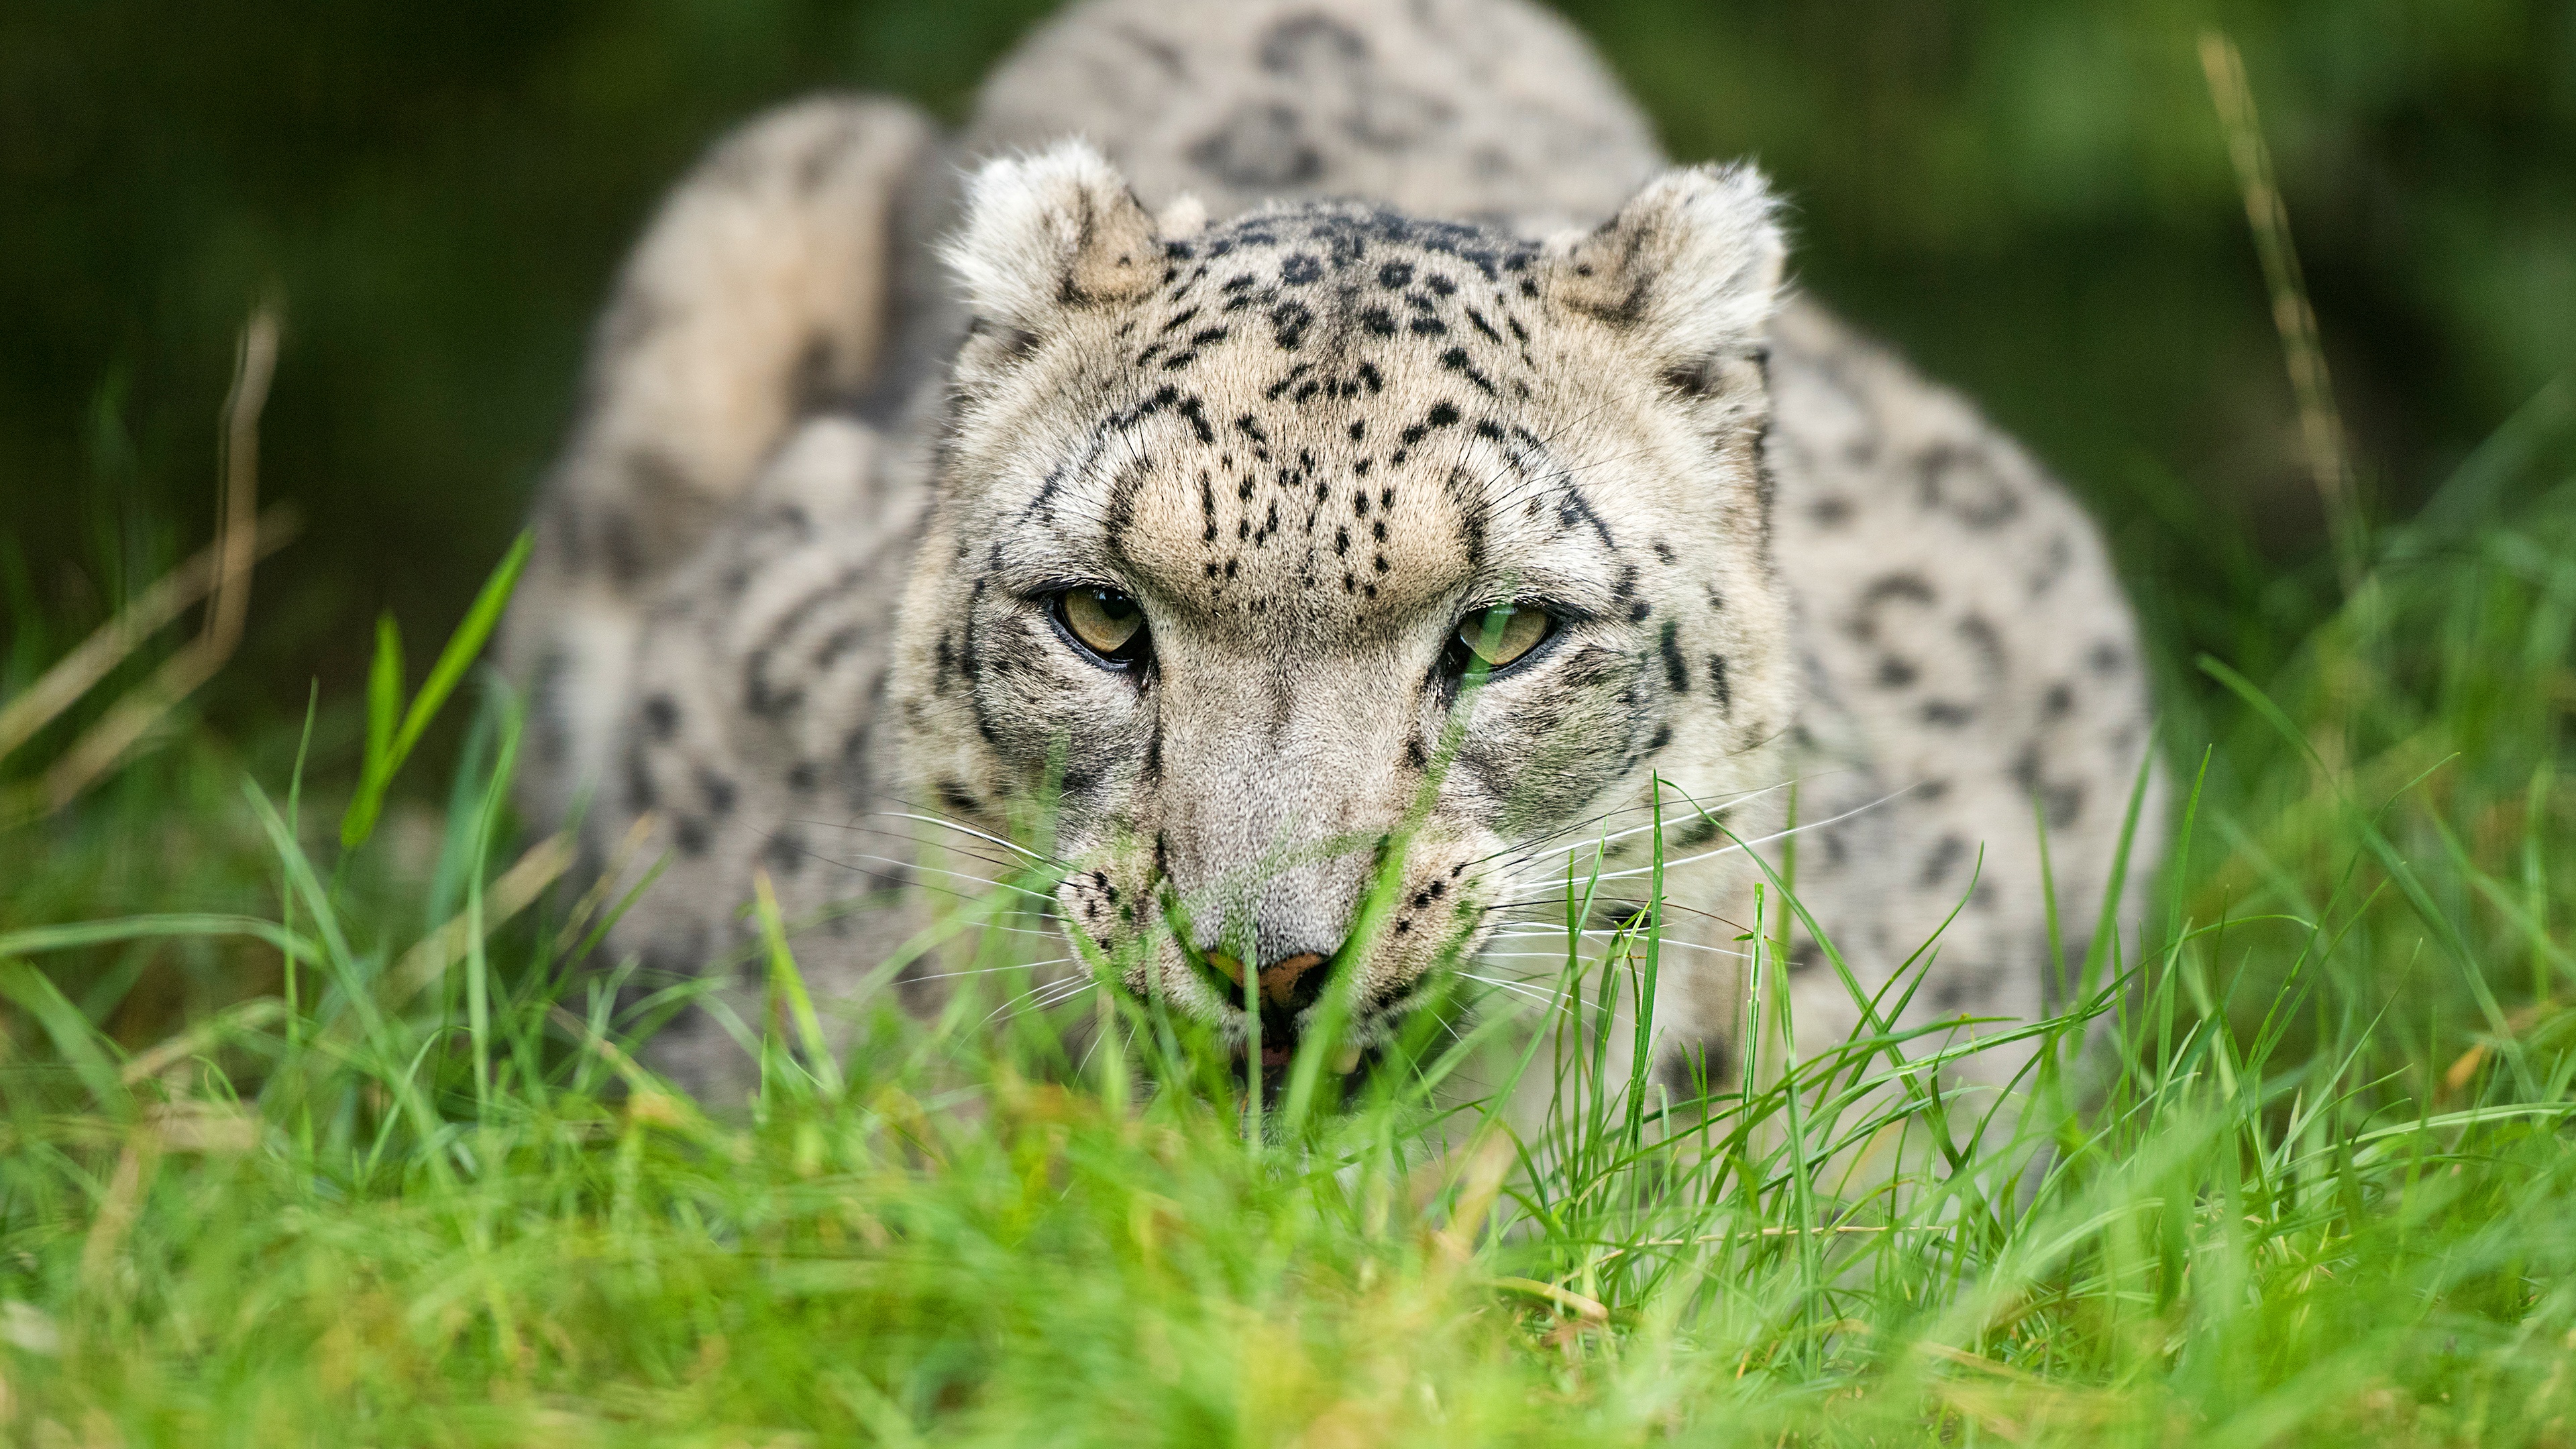 Wallpapers cats predator snow leopard on the desktop